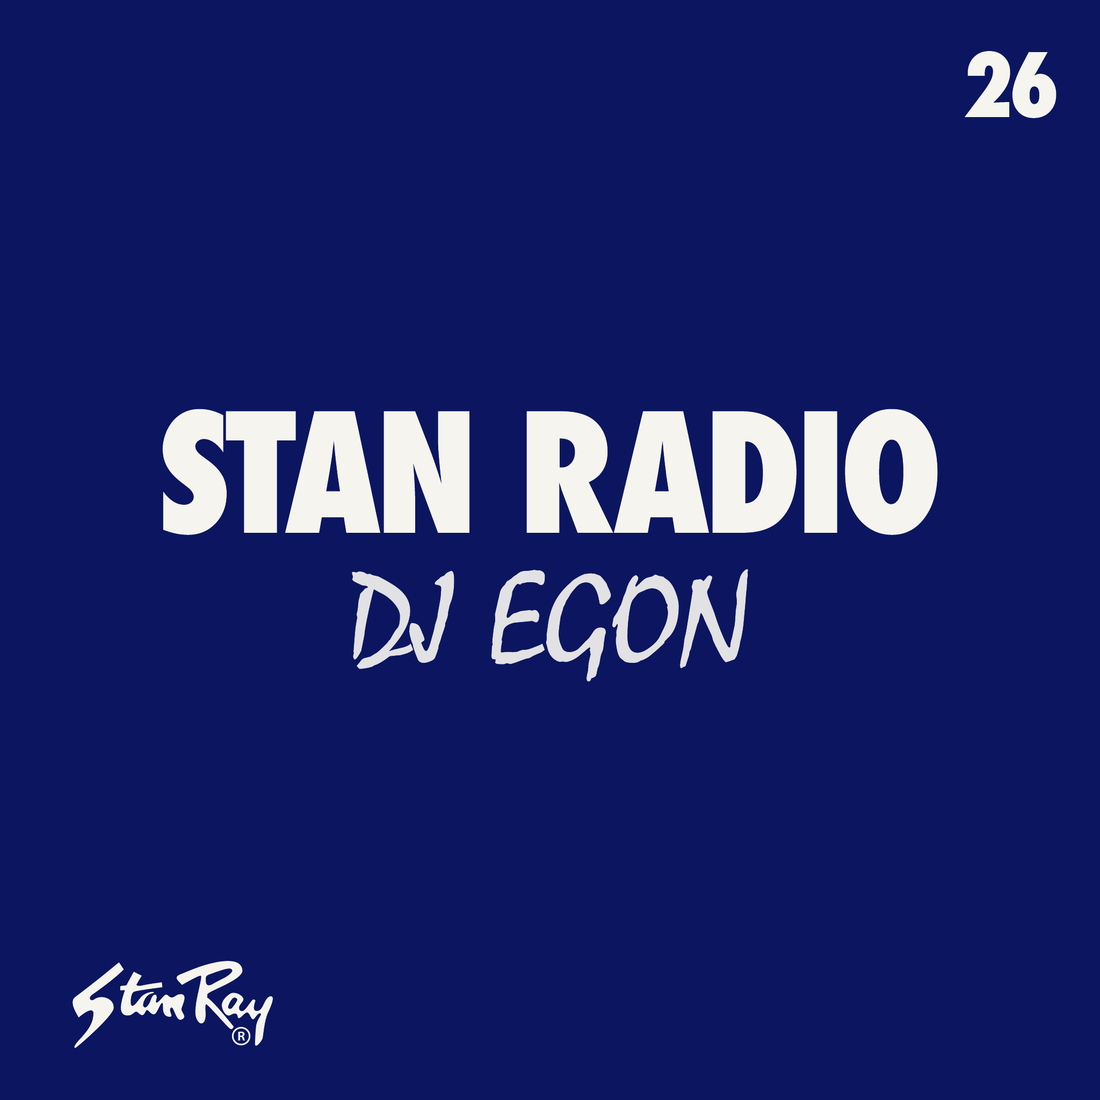 Stan Radio 26: DJ Egon